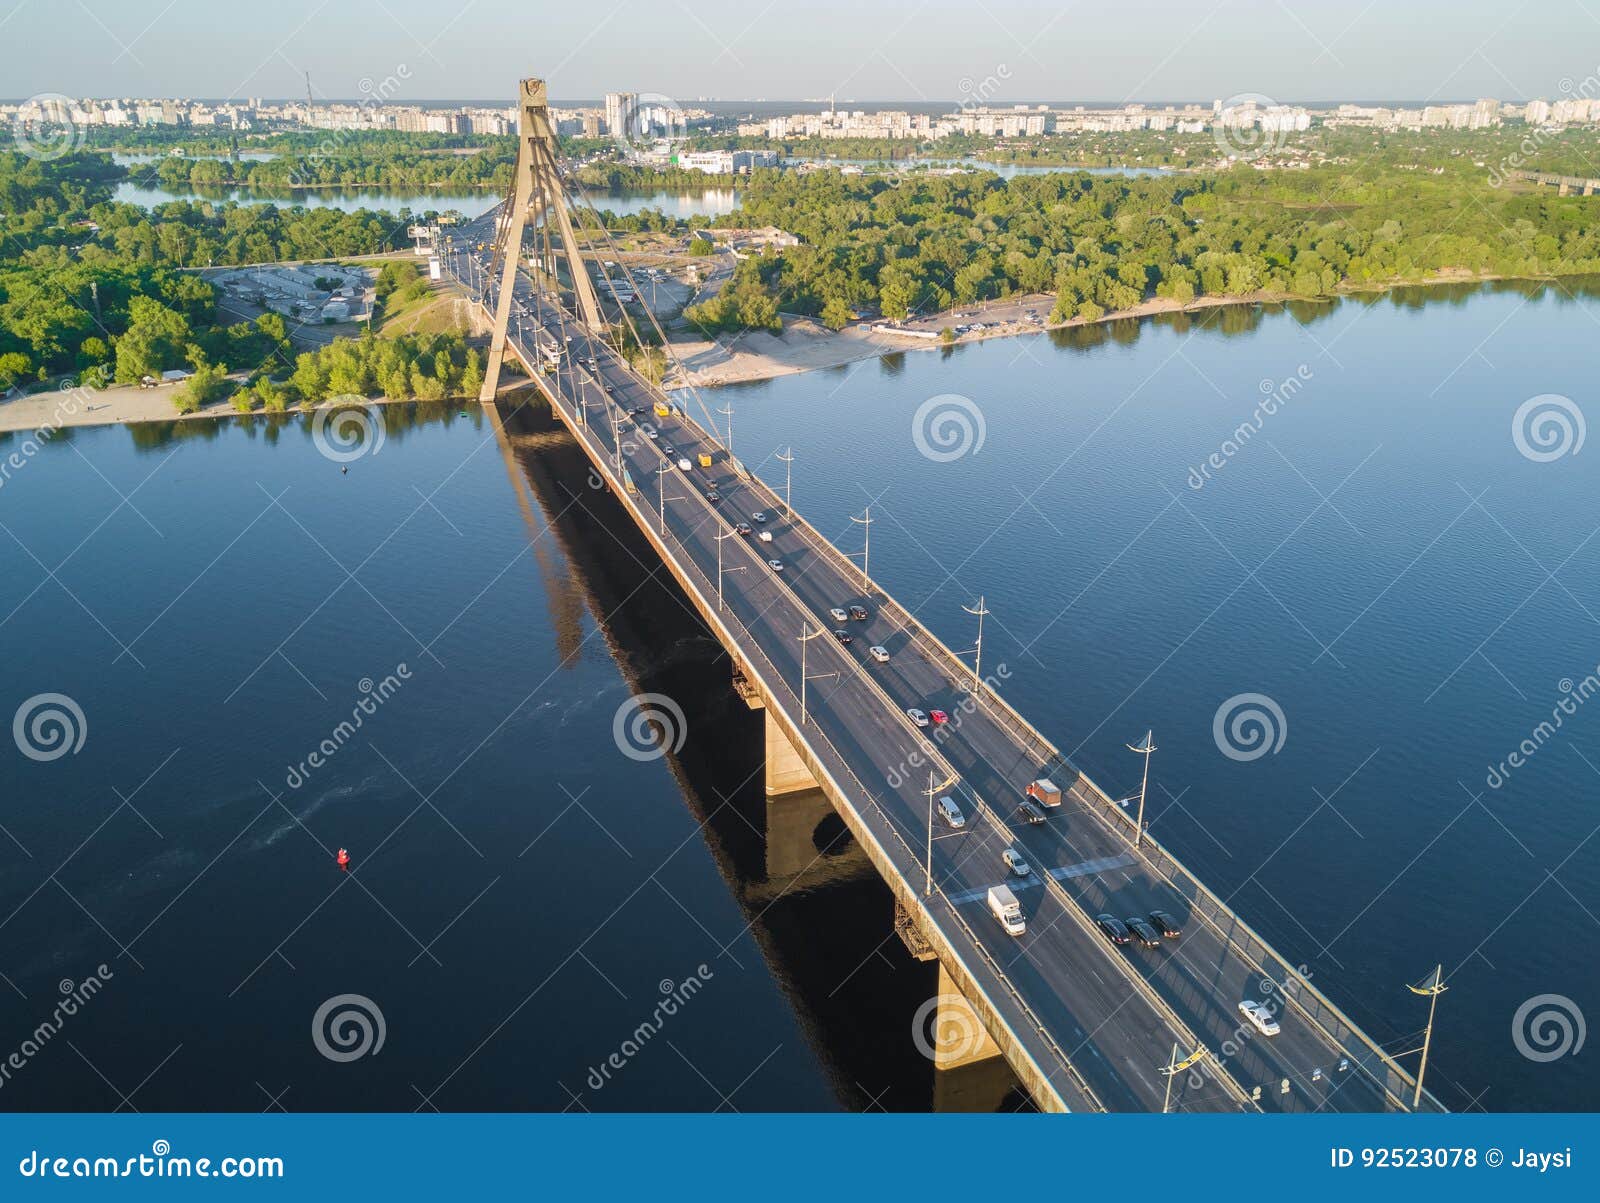 aerial view of dnipro river and moskovskiy bridge in kyiv, ukraine